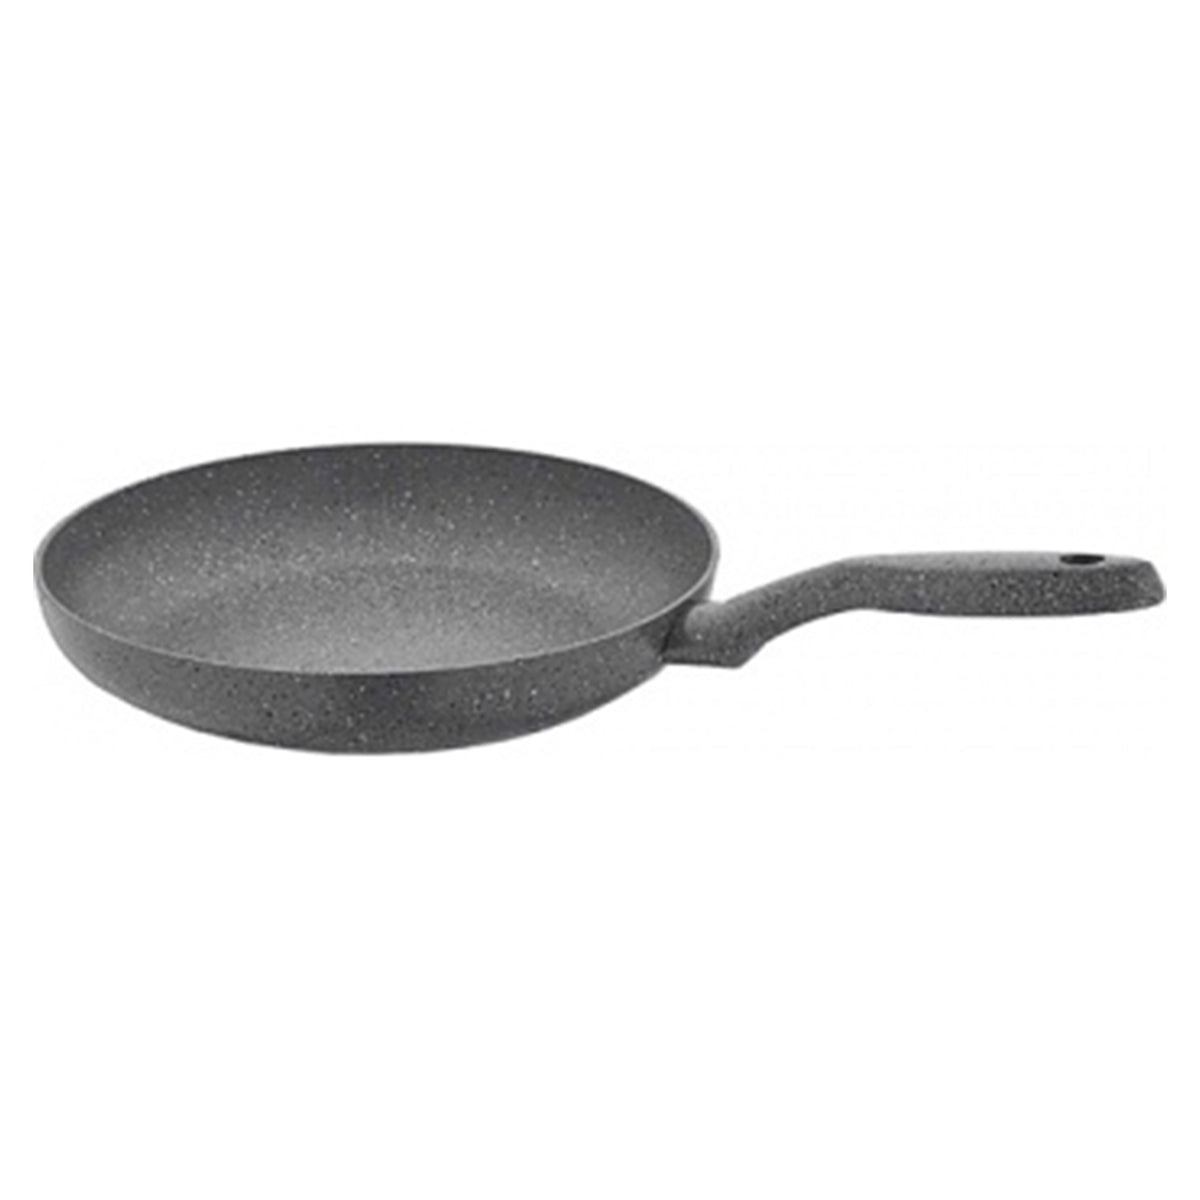 Frying Pan with handle, Grey